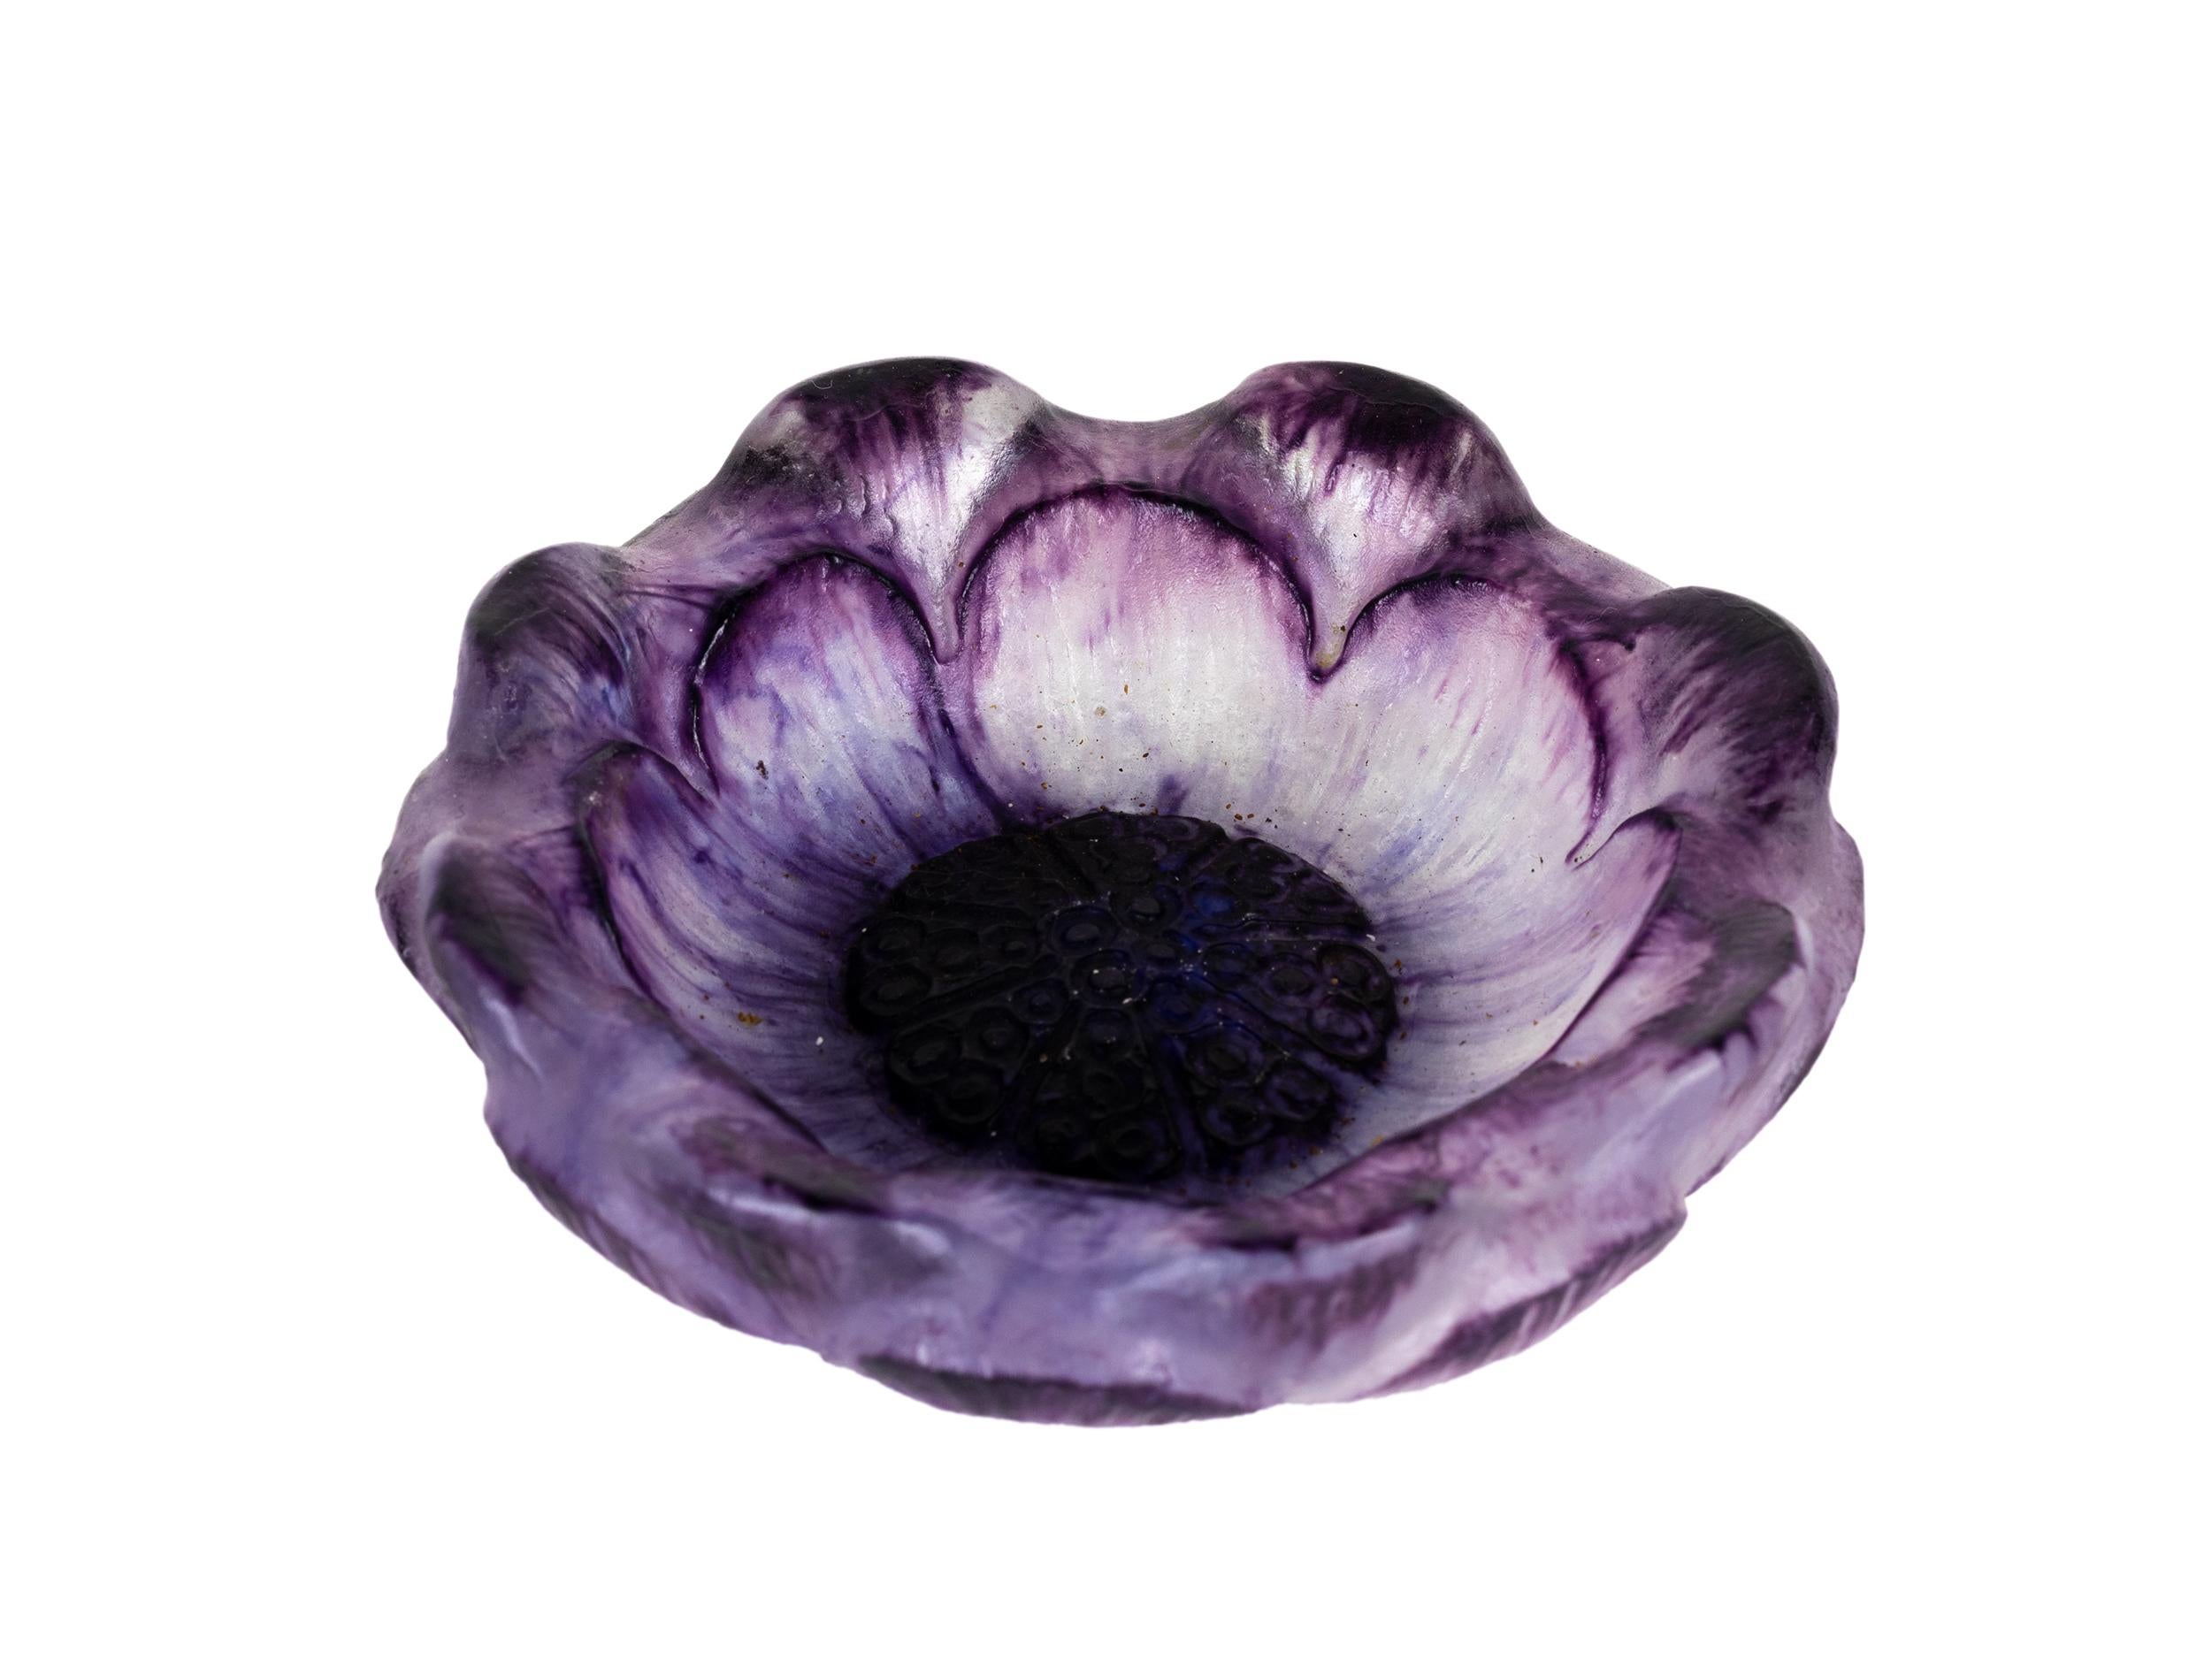 Pate-de-verre 'Open Flower' purple glass vase/ bowl. 
Circa 1924.
Modeled and cast as an open flower head, on a short foot (restored) with ‘G. Argy-Rousseau’ signature.  

Literature: Janine Bloch-Dermant, 'G. Argy-Rousseau Glassware artist', Thames